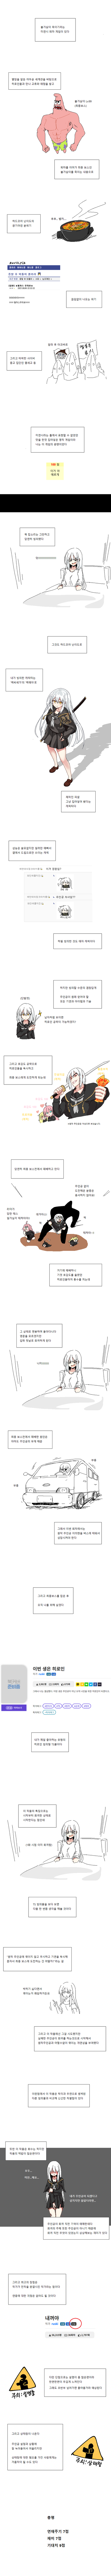 TS물 새싹 홍보만화 3편.manhwa